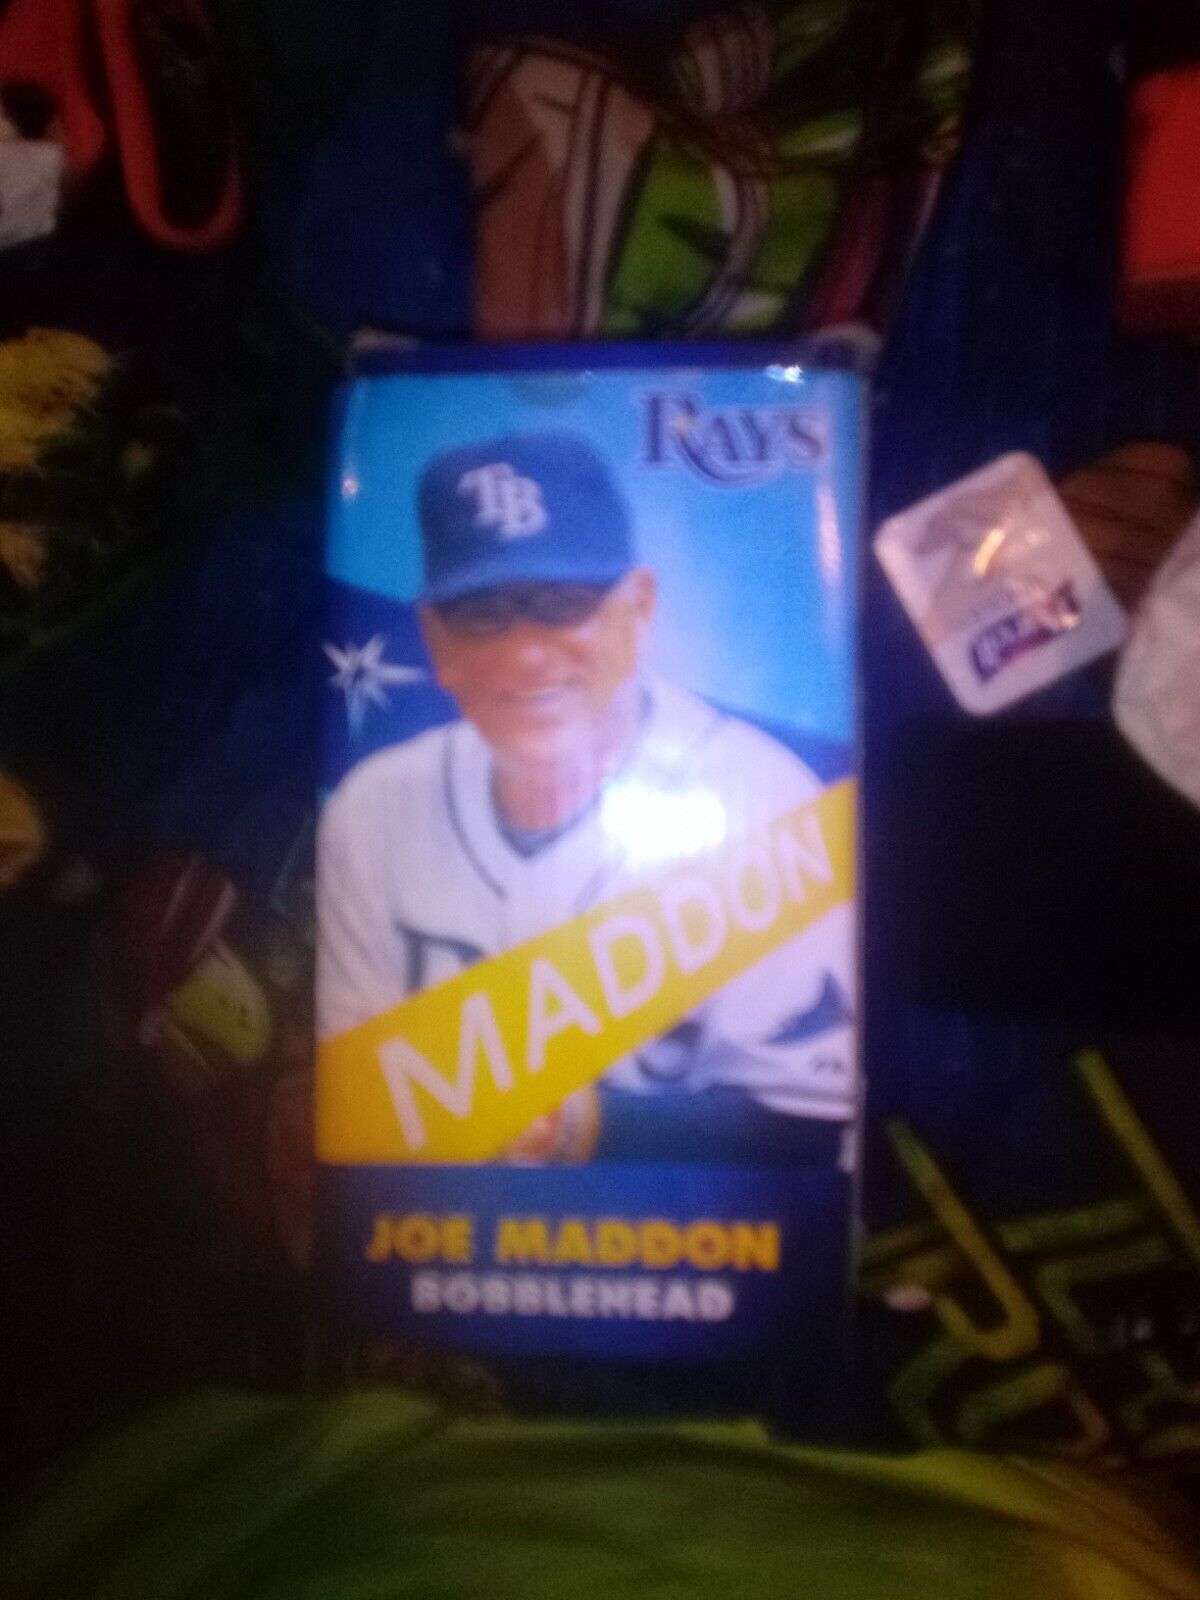 Joe Maddon Tampa Bay Rays 2012 Bobblehead